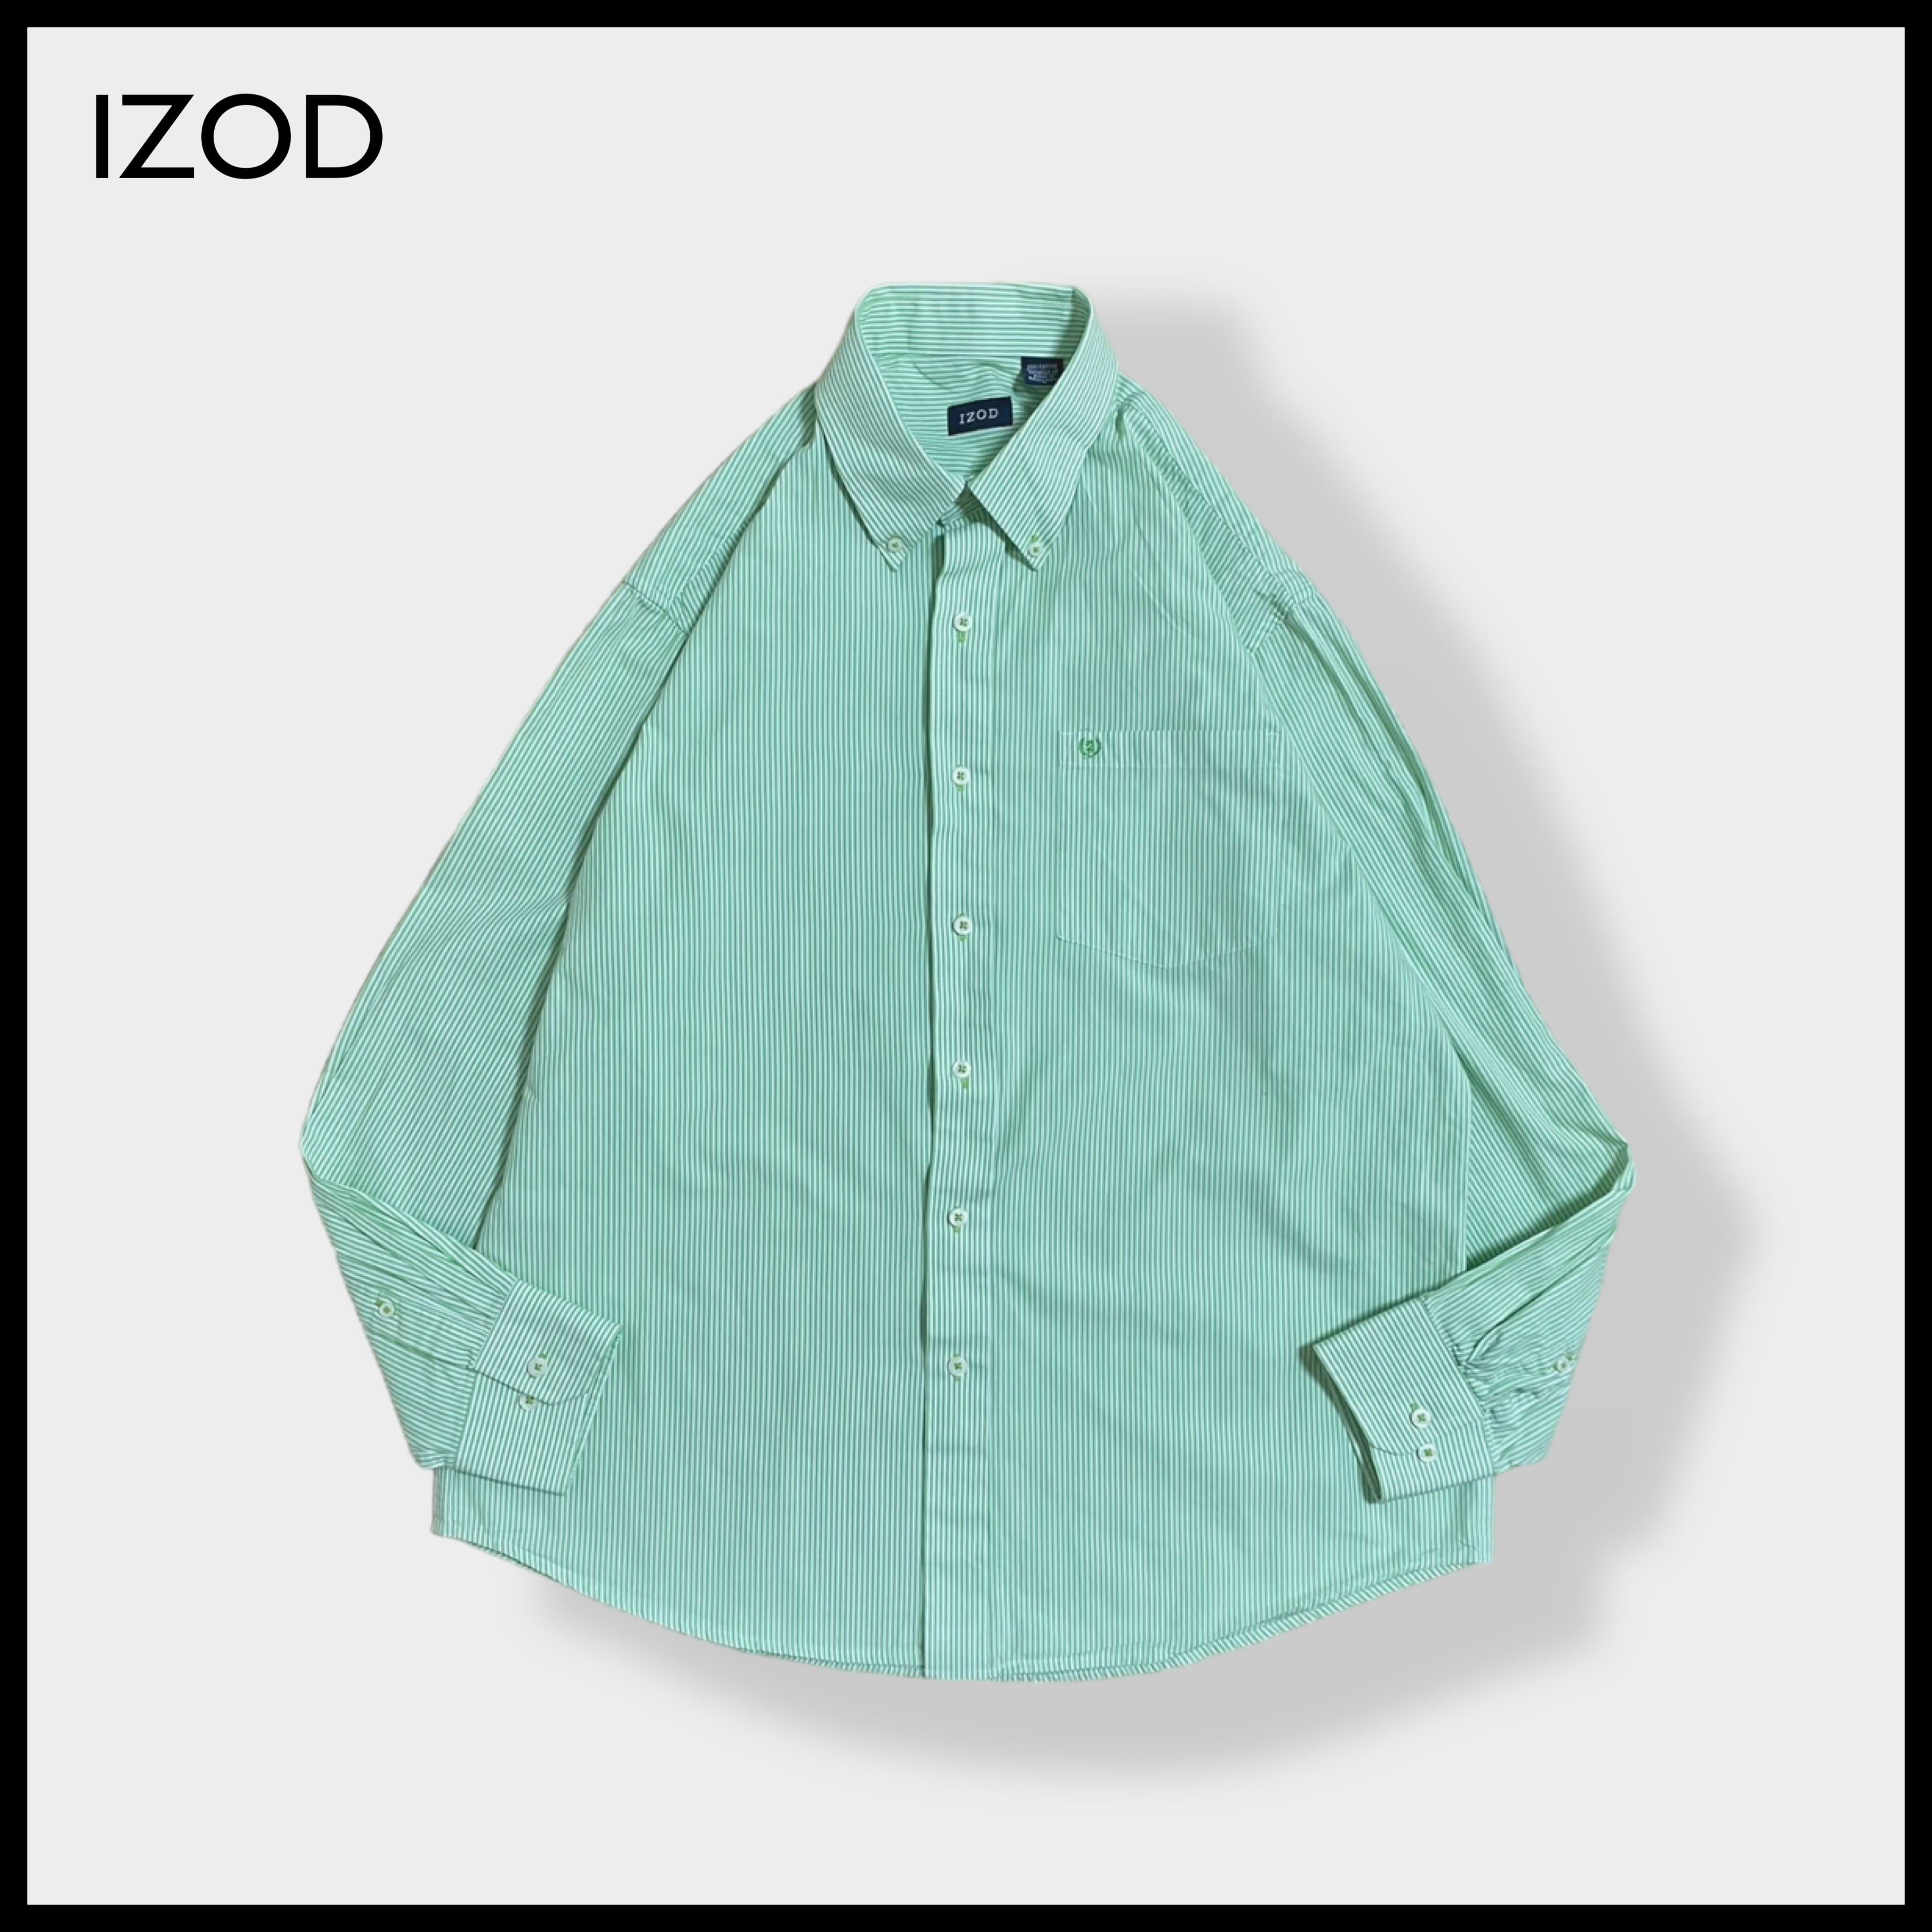 【IZOD】ストライプシャツ ライトグリーン ボタンダウン 刺繍ロゴ ...